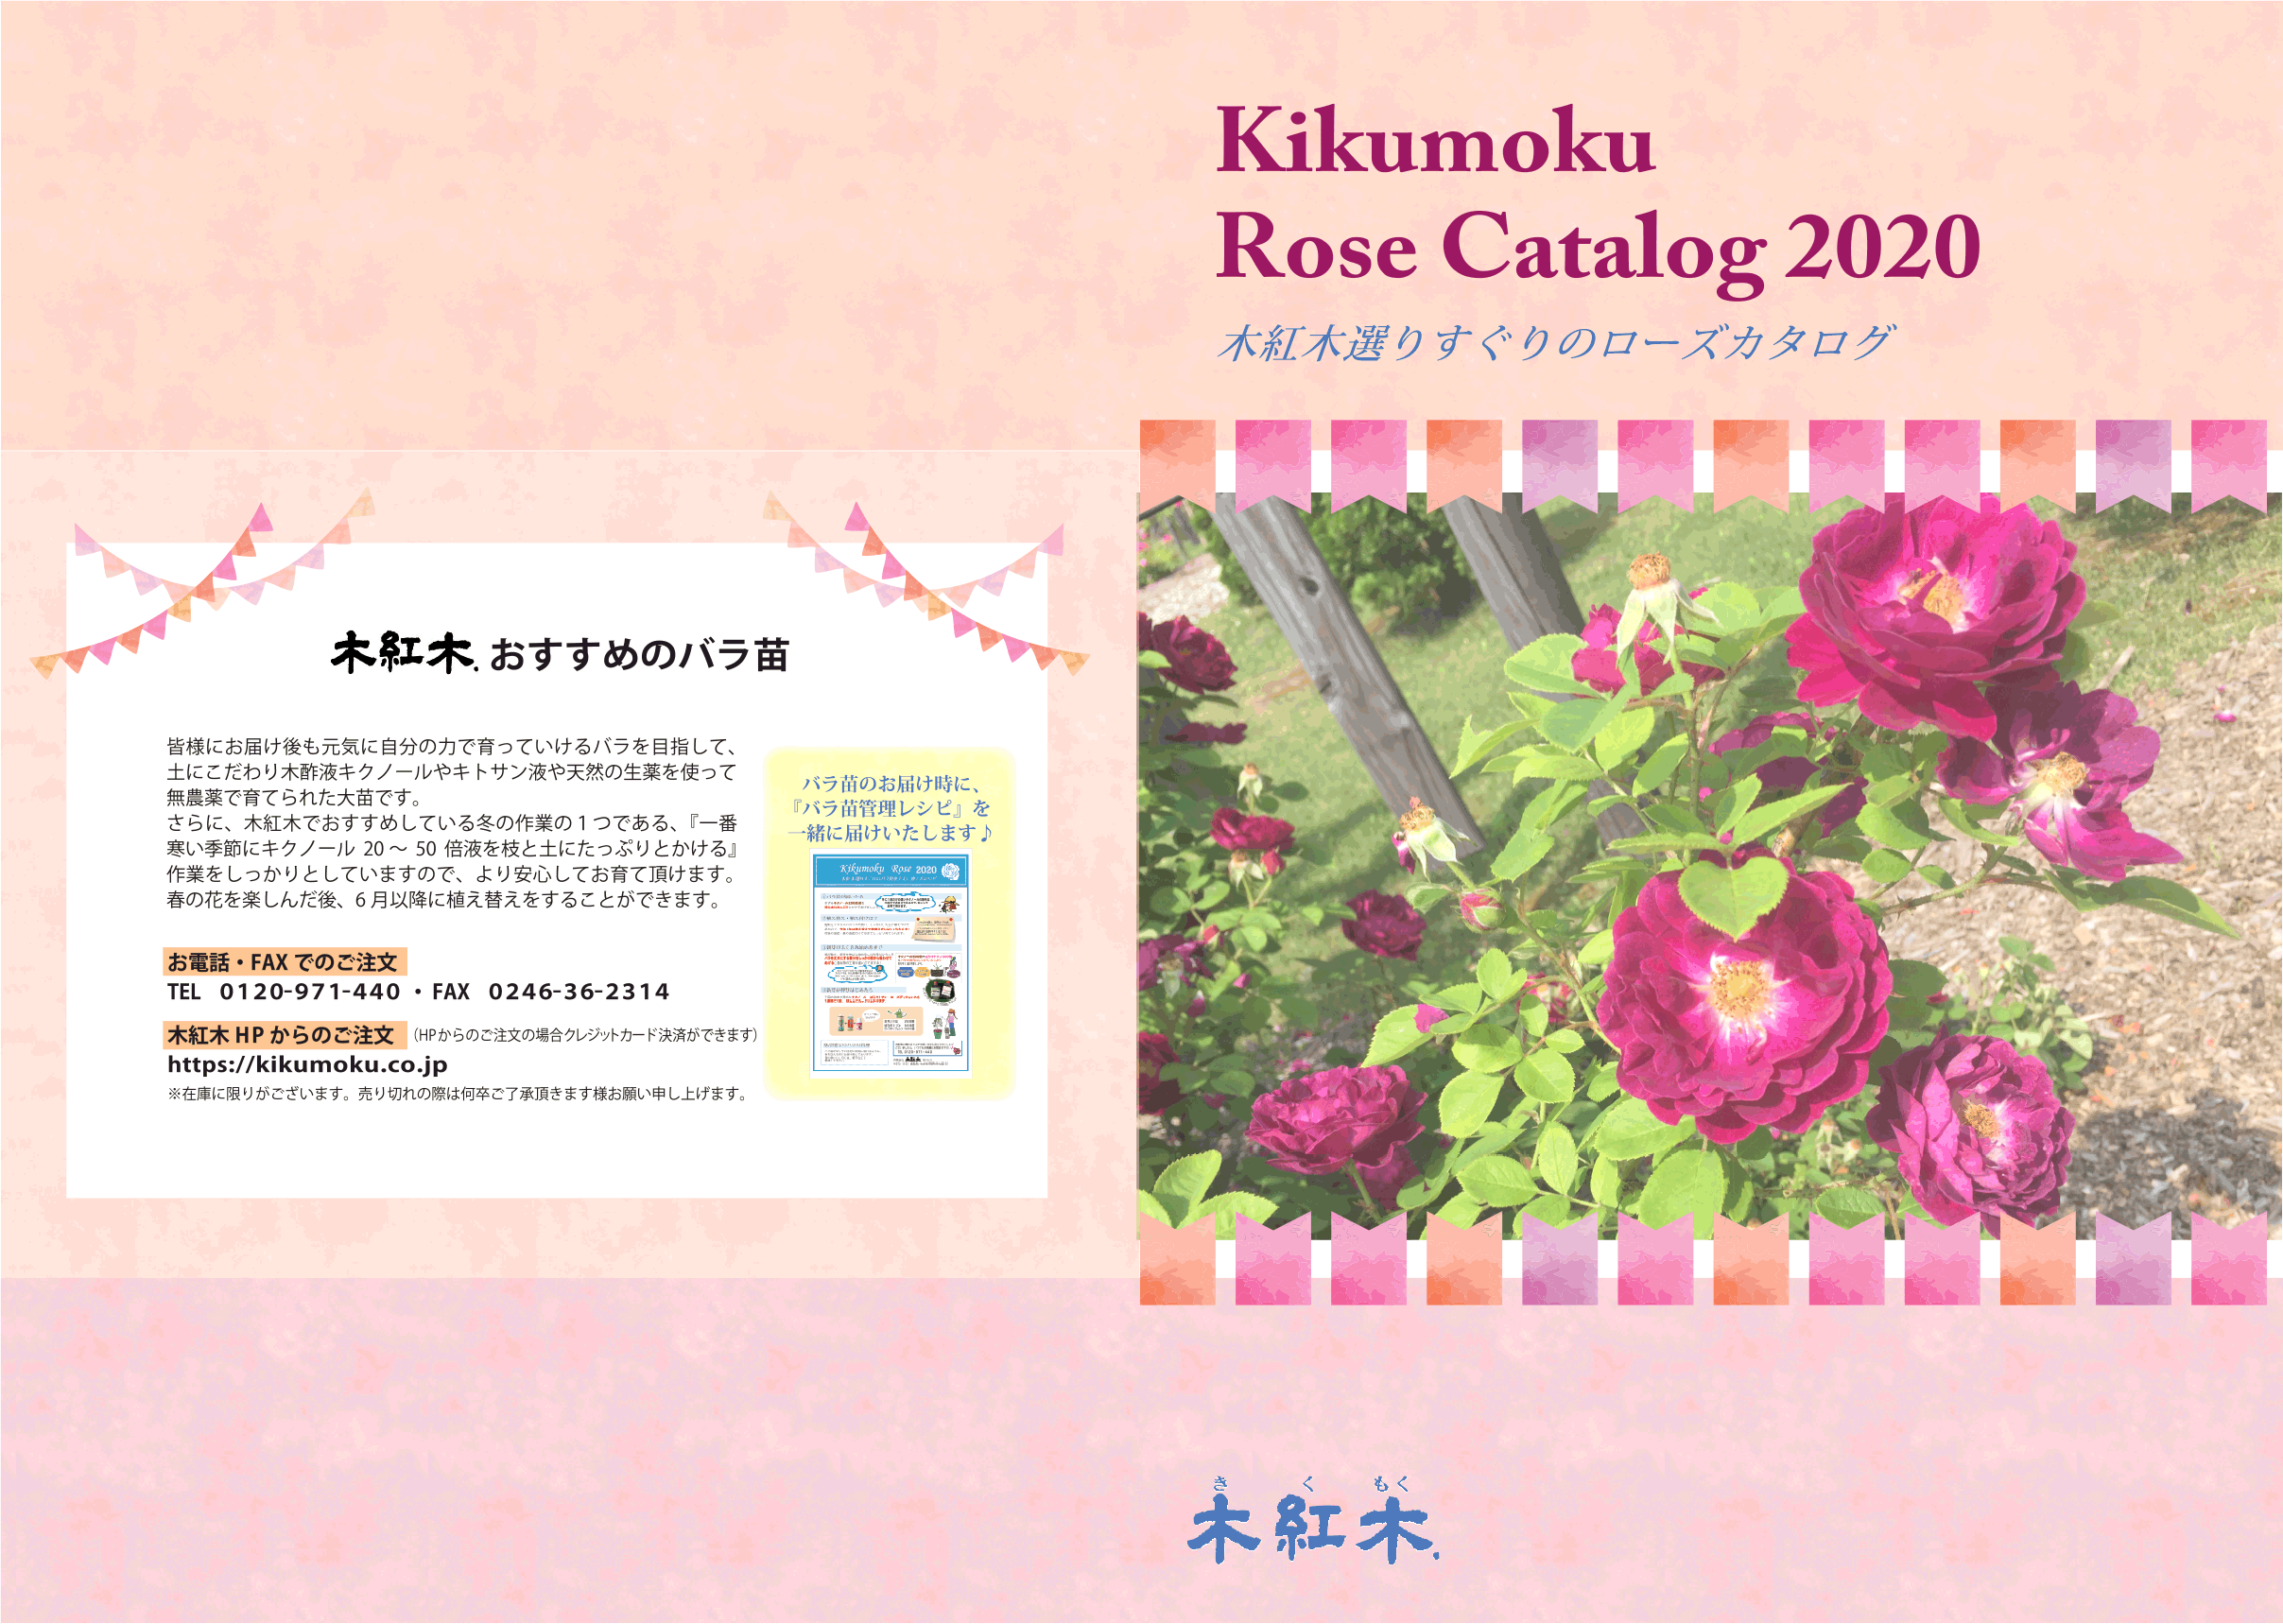 Kikumoku Rose Catalog 2020